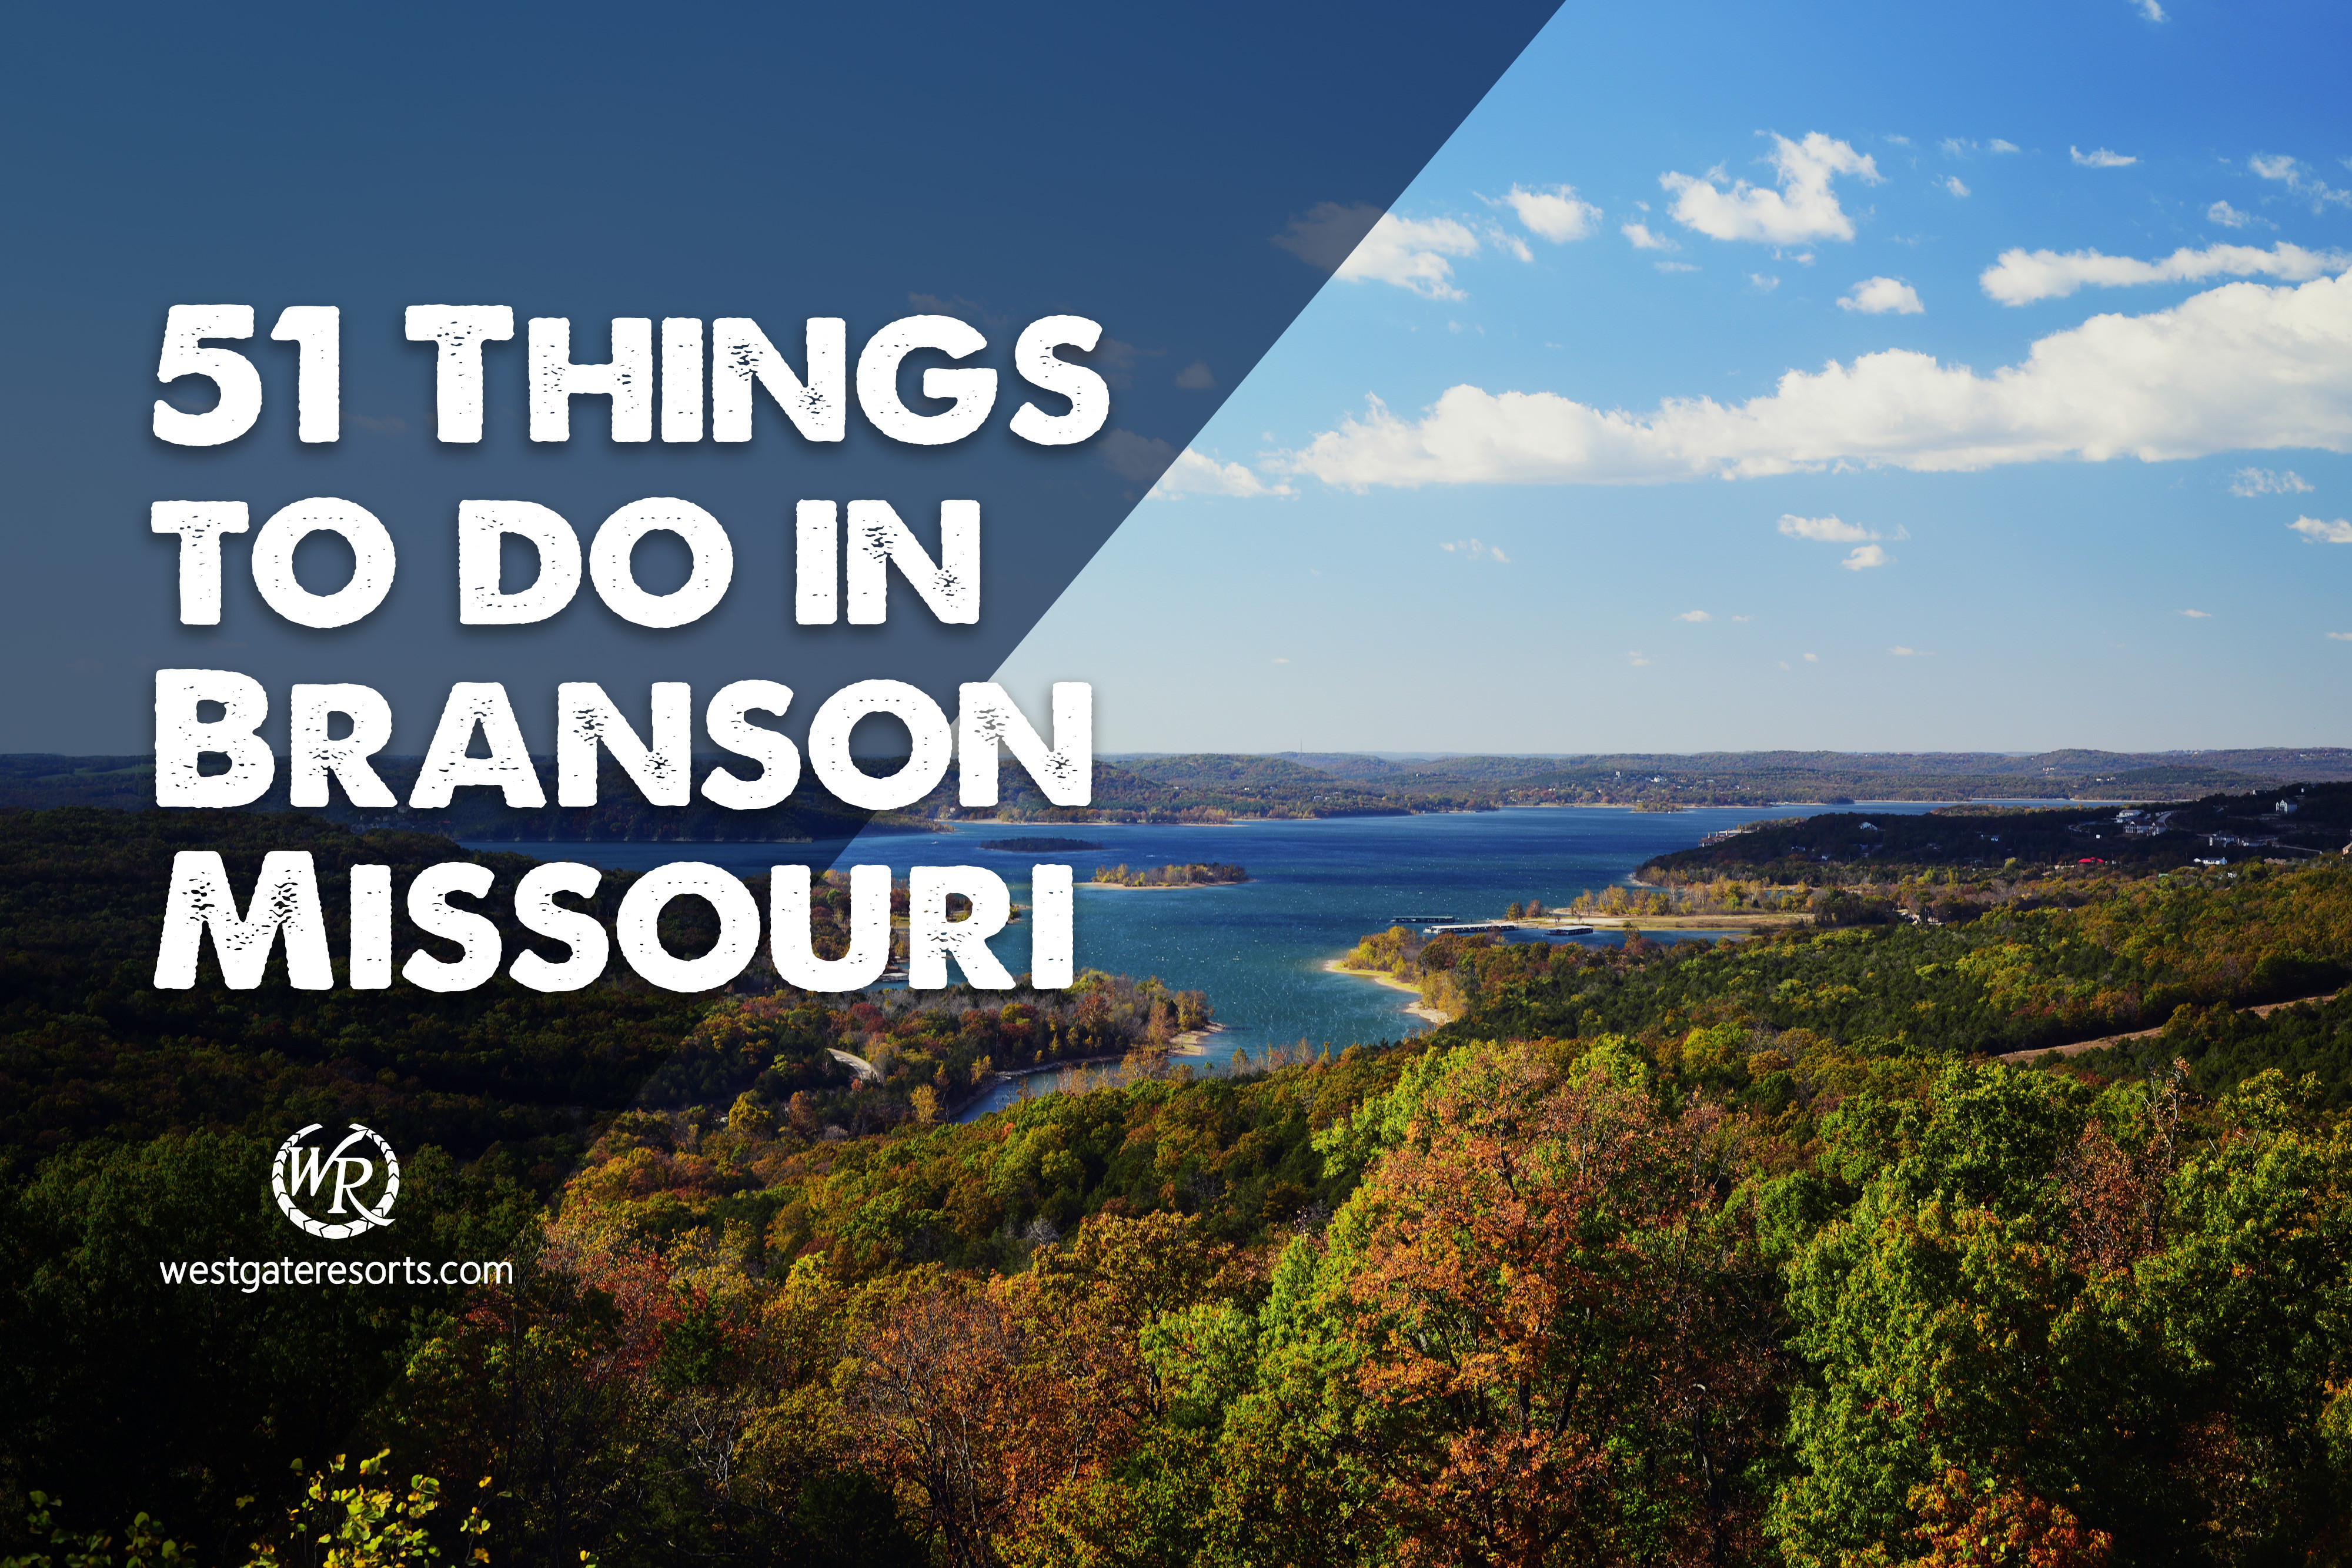 51 Things to do in Branson Missouri